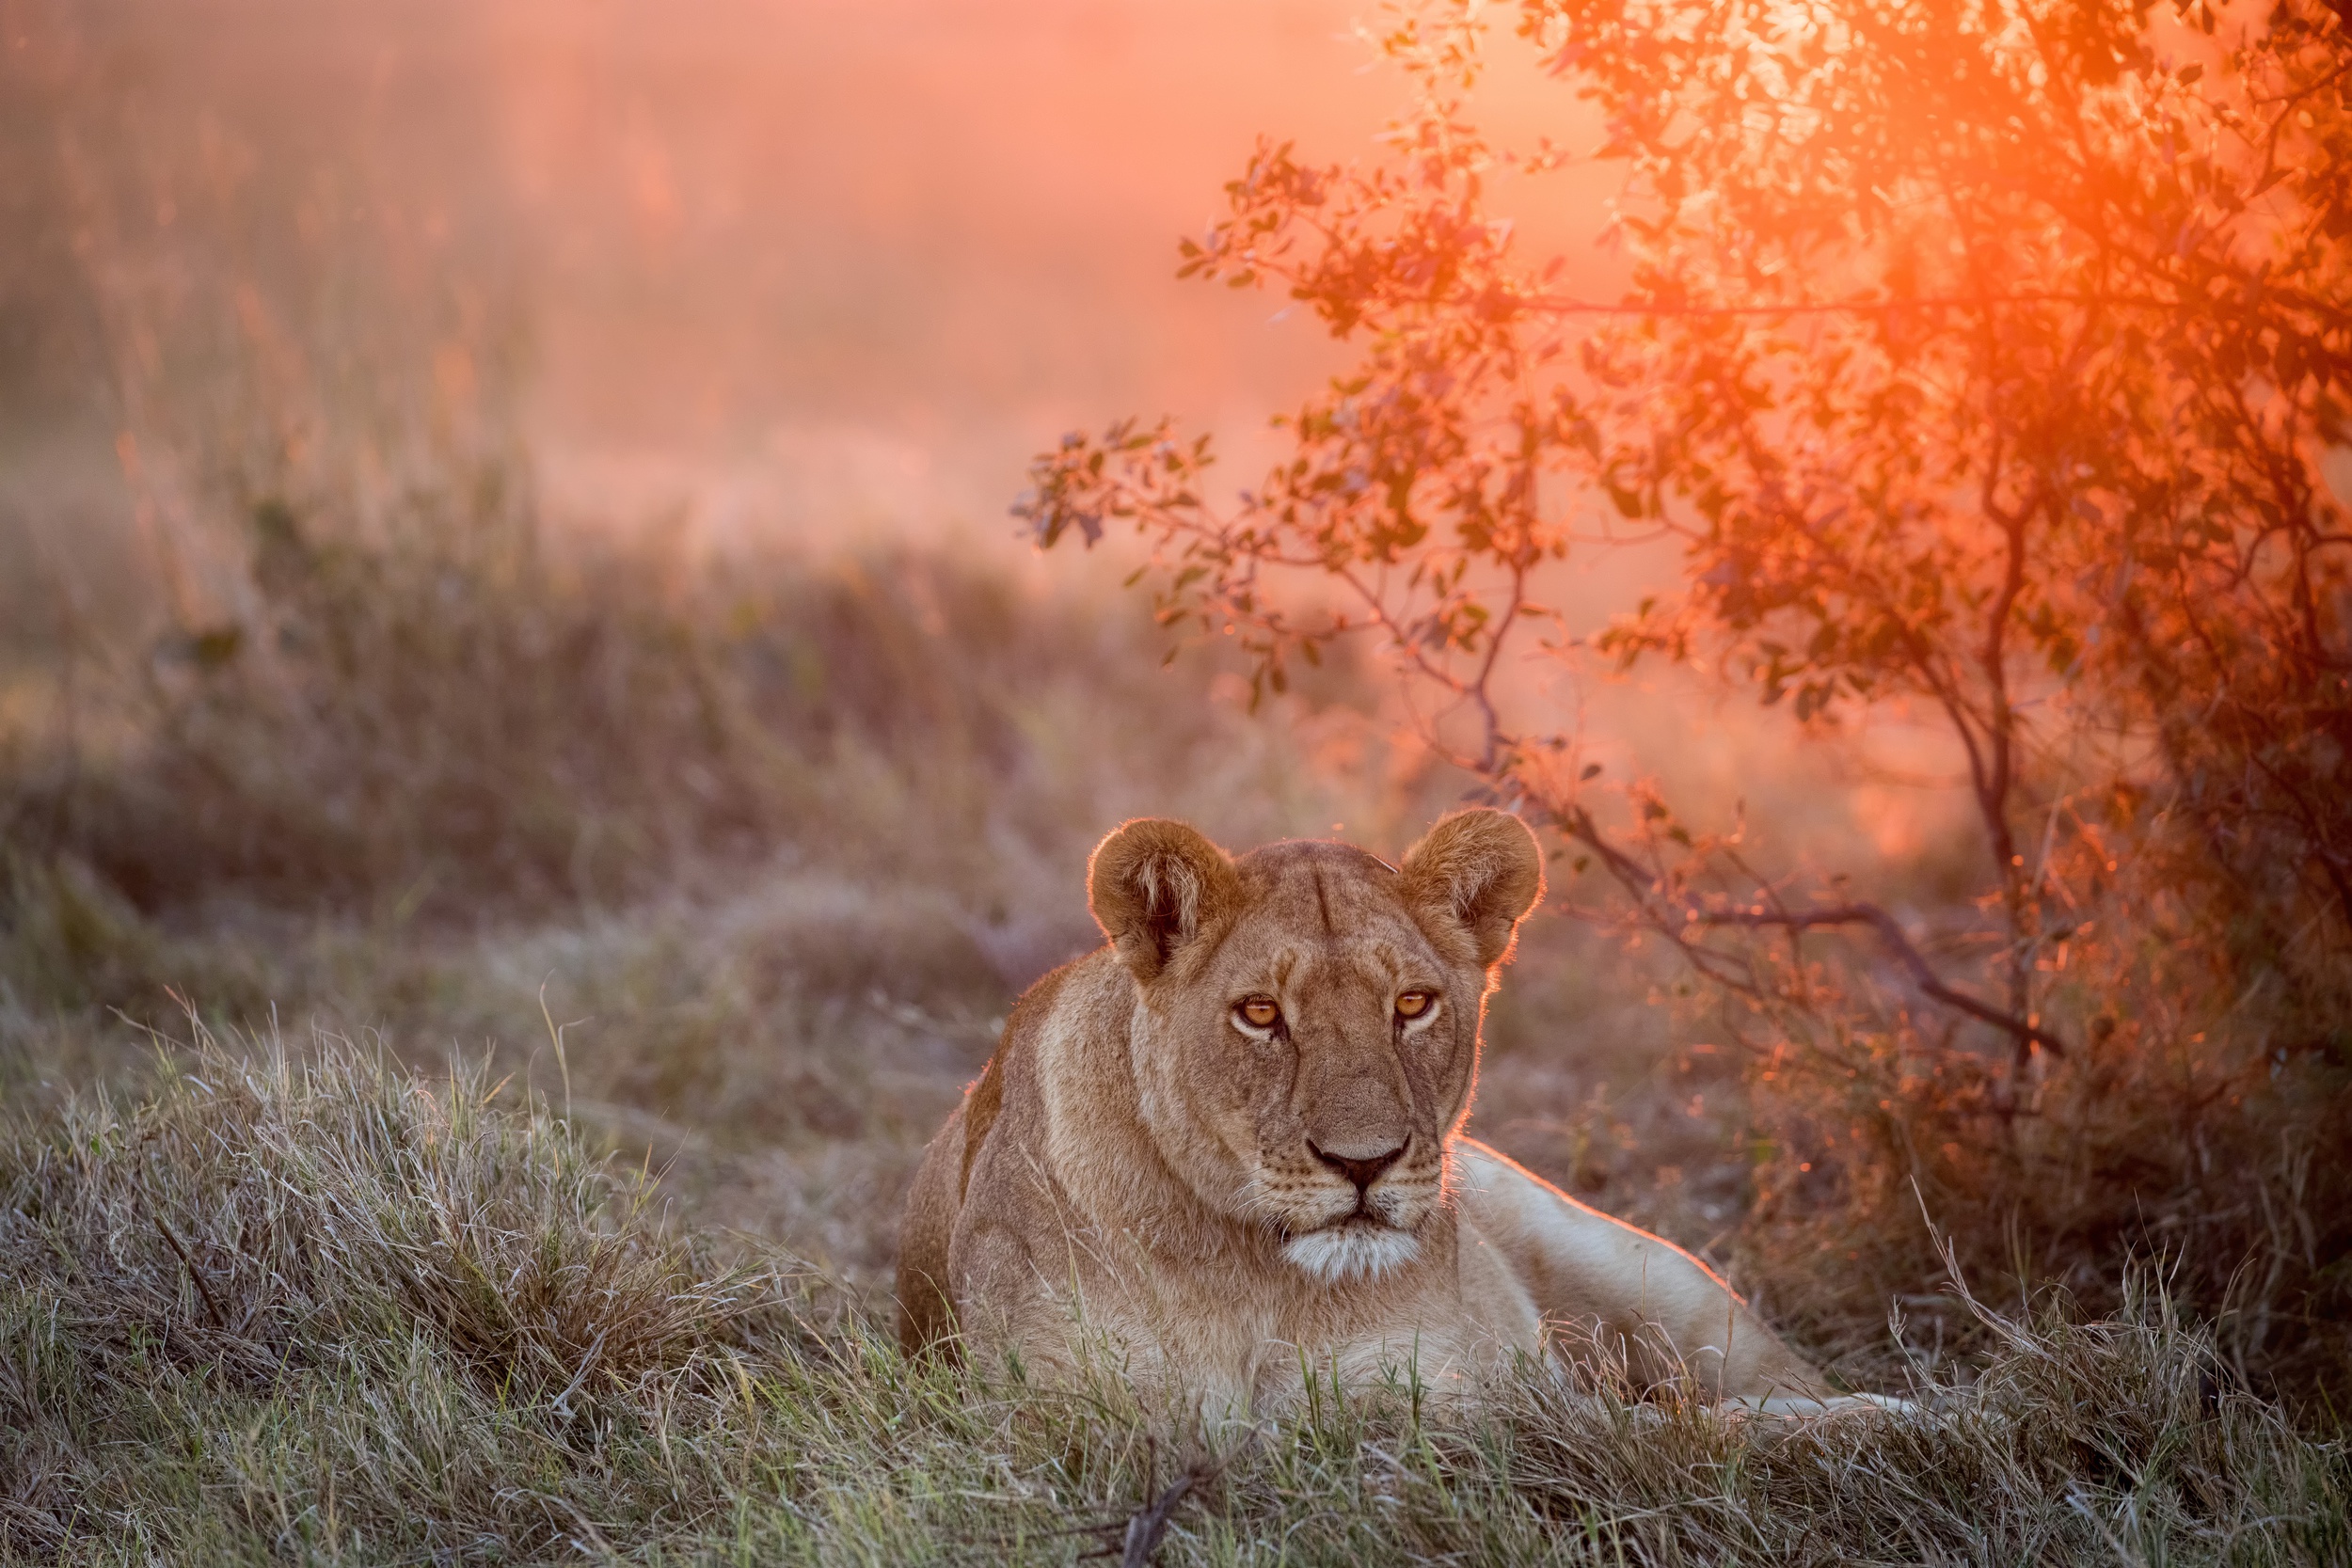 416920 descargar imagen animales, león, leona, atardecer, gatos: fondos de pantalla y protectores de pantalla gratis